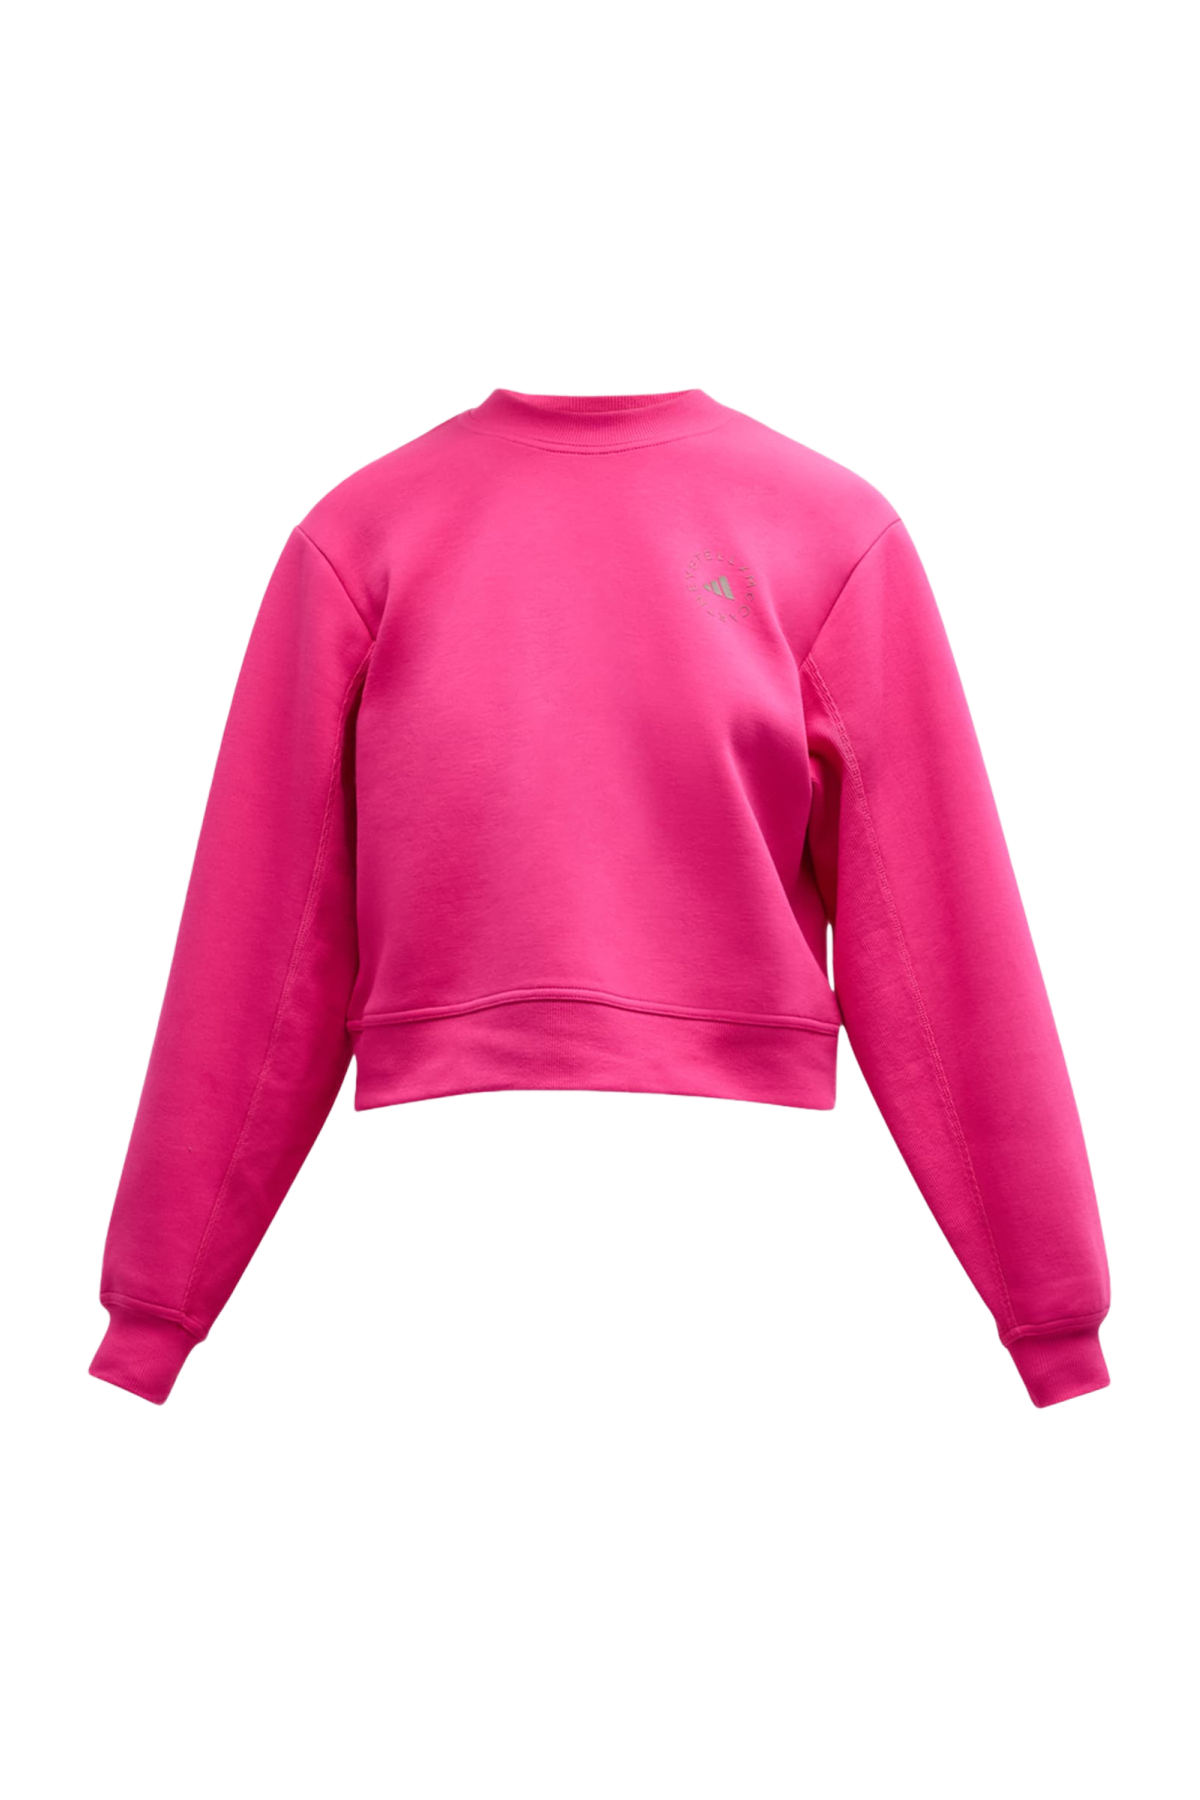 Adidas By Stella McCartney TrueCasuals Organic Cotton-Blend Sweatshirt